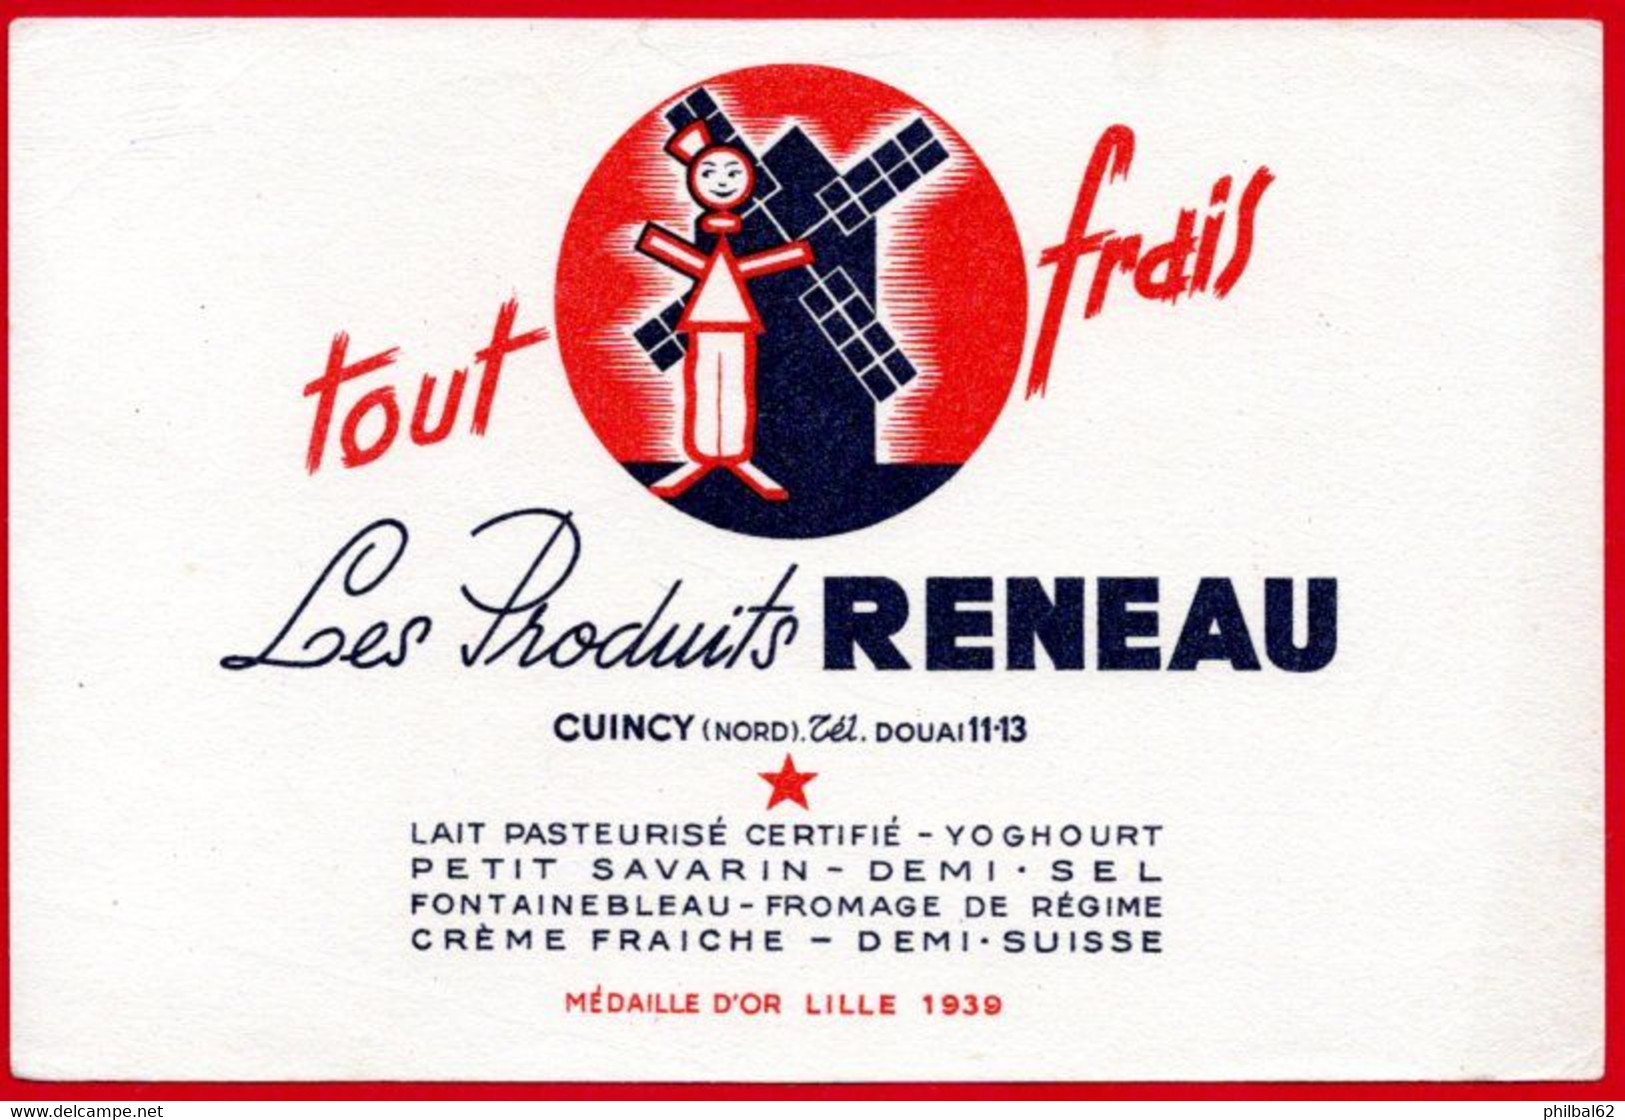 Buvard Produits Reneau, Cuincy, Nord. - Milchprodukte